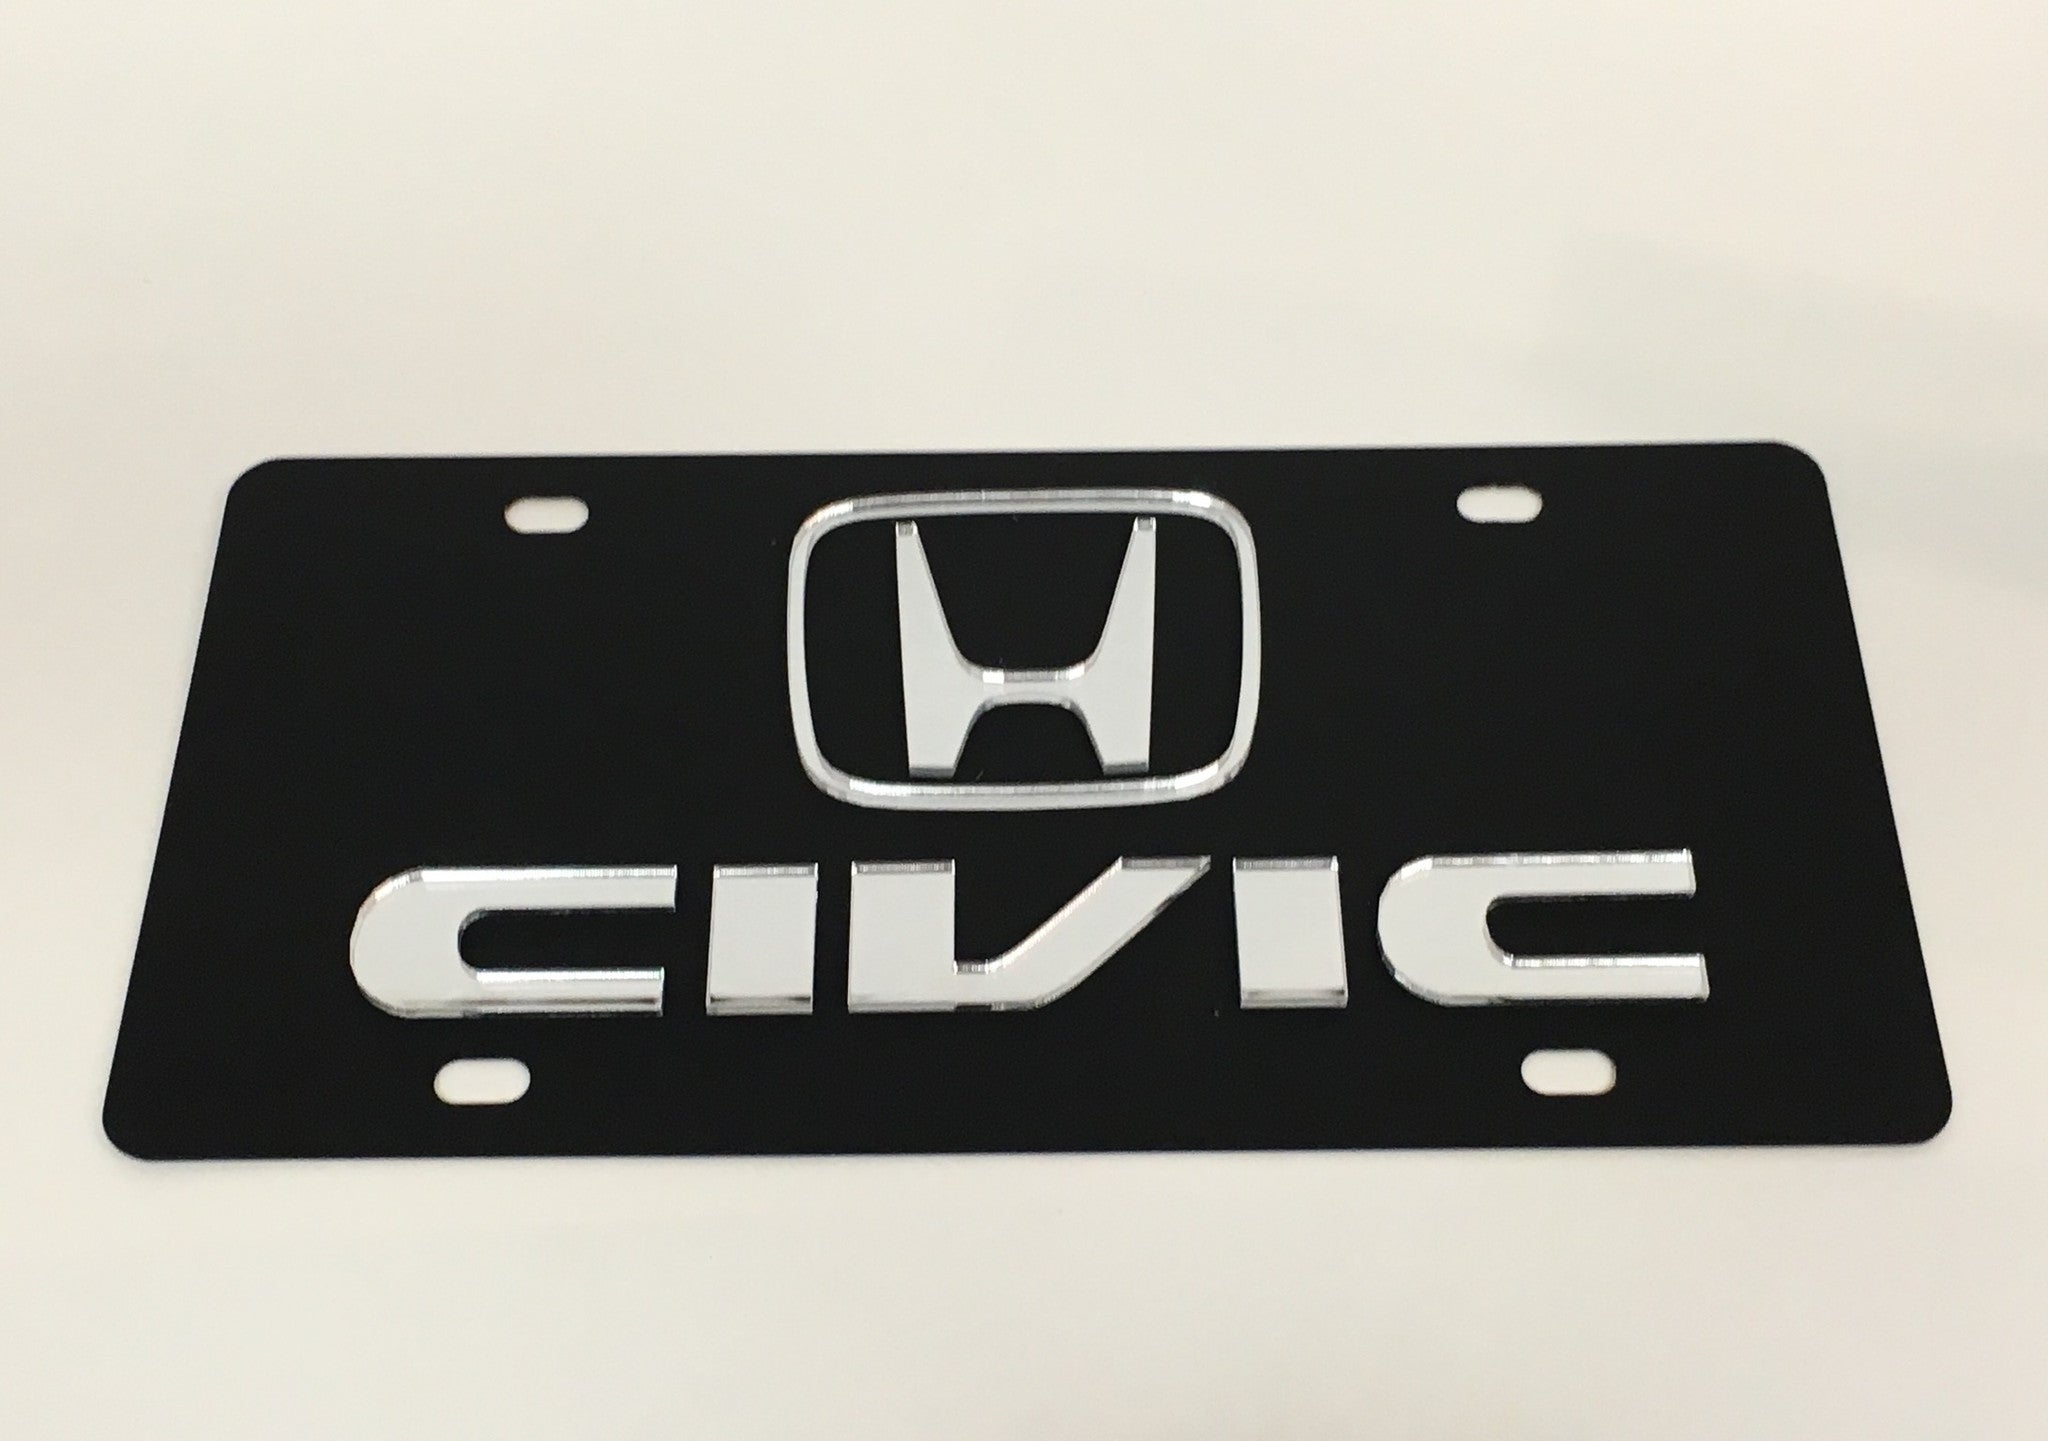 Honda Civic Stainless Steel License Plate